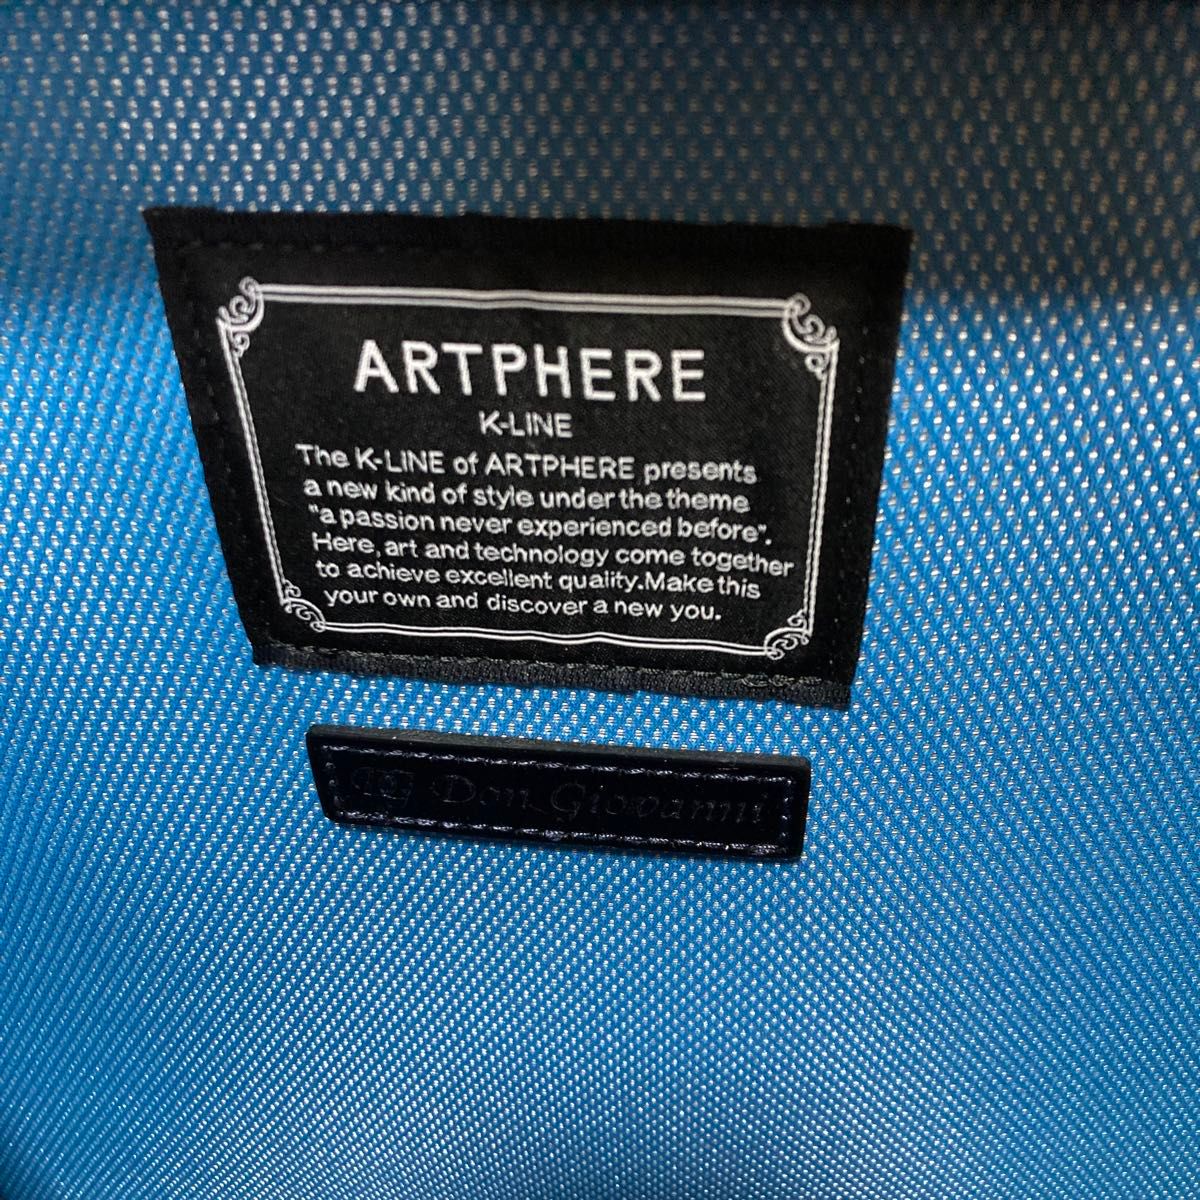 ARTPHERE アートフィアー ダレスバッグ リュック ビジネスバッグ 豊岡鞄